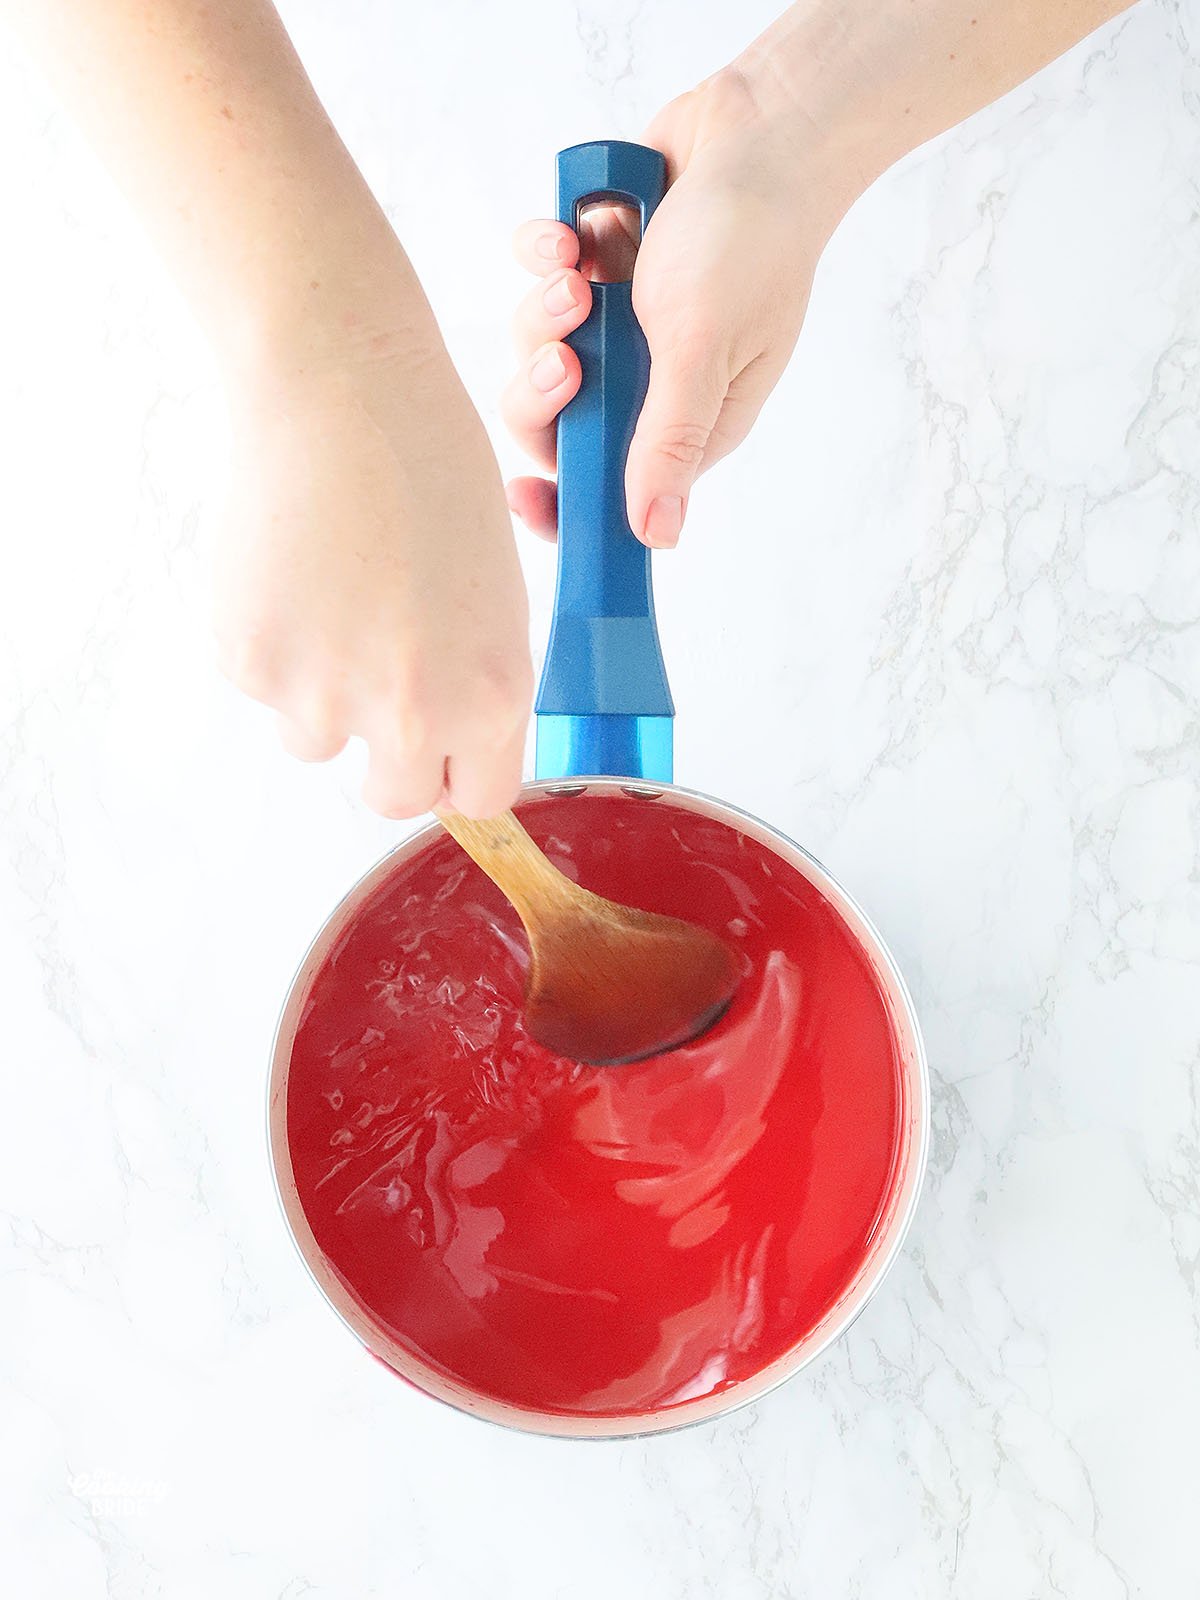 stirring strawberry gelatin into hot lemonade